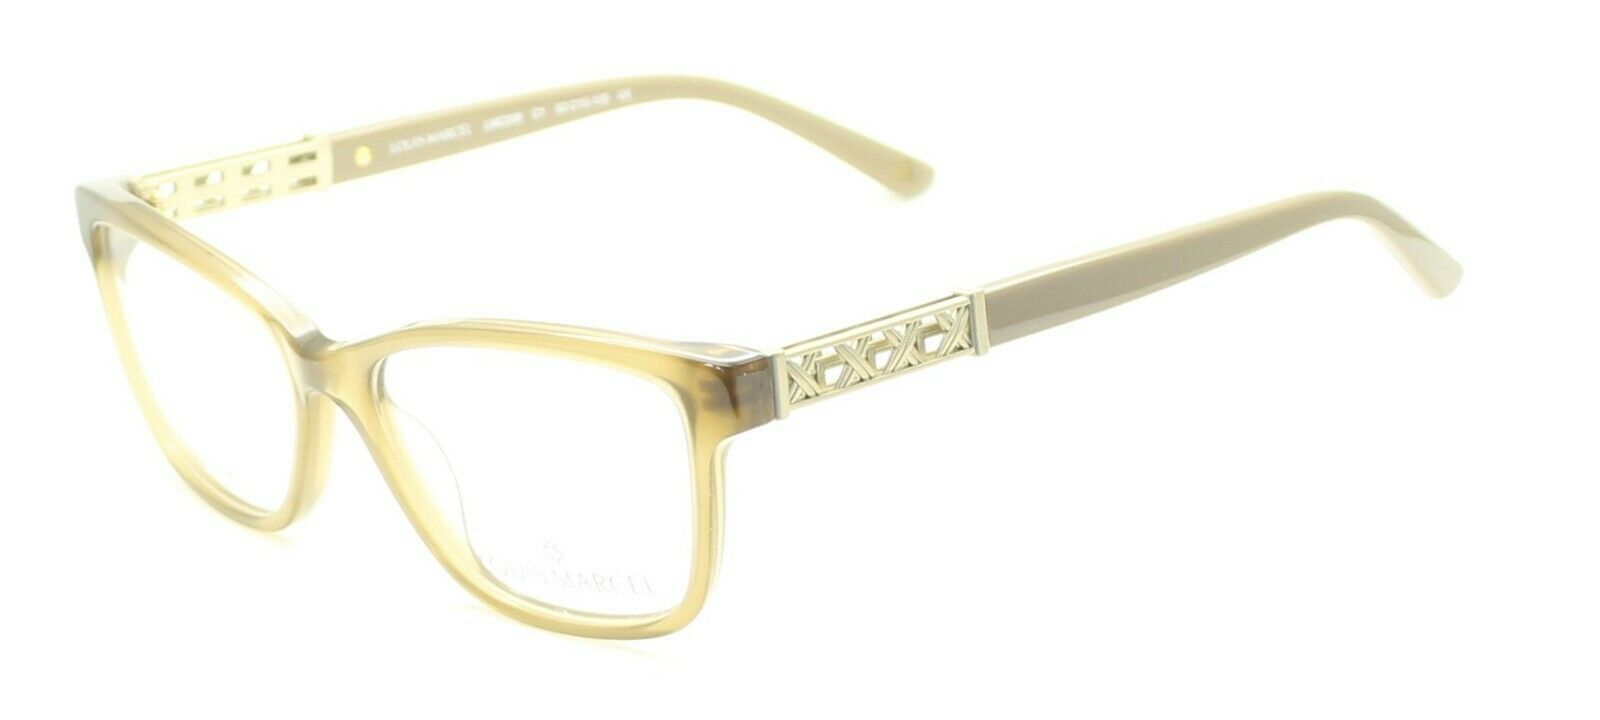 LOUIS MARCEL LMC208 C1 52mm Eyewear FRAMES RX Optical Eyeglasses Glasses - New